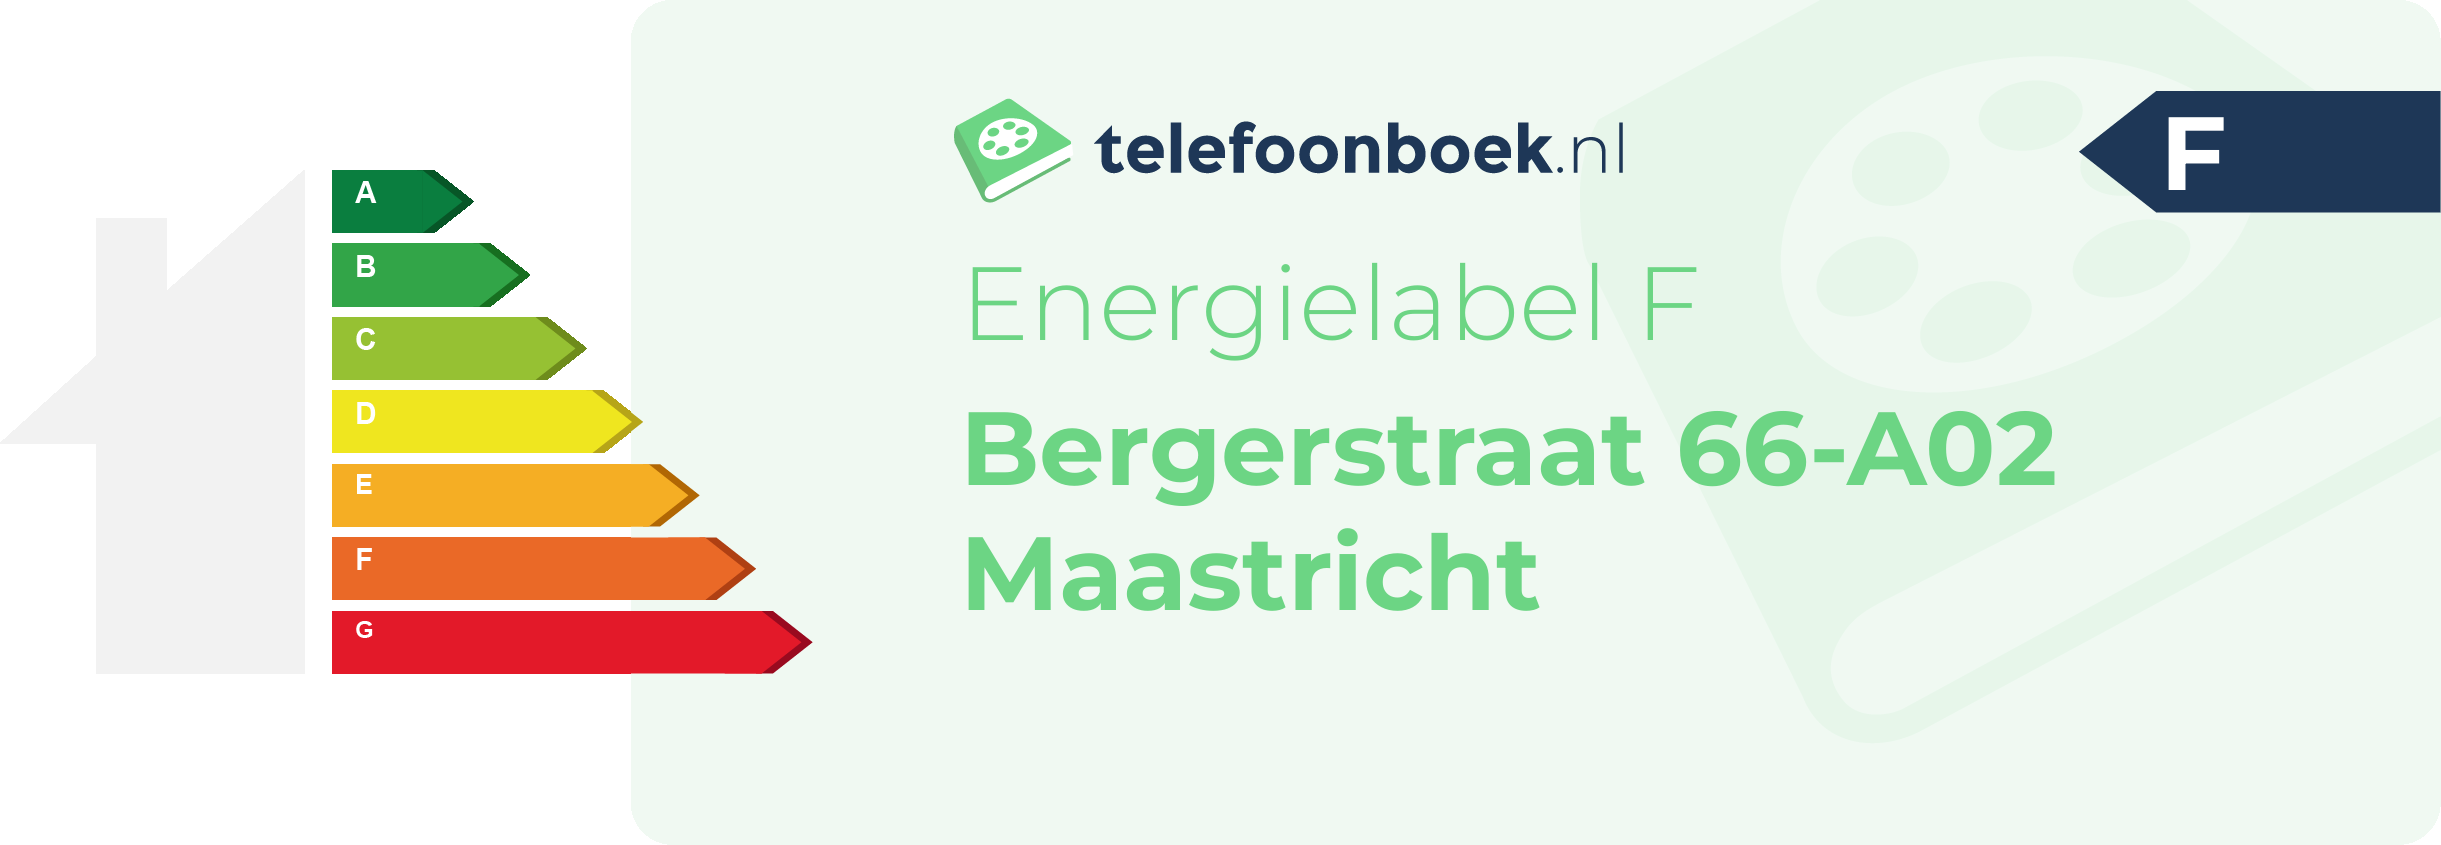 Energielabel Bergerstraat 66-A02 Maastricht